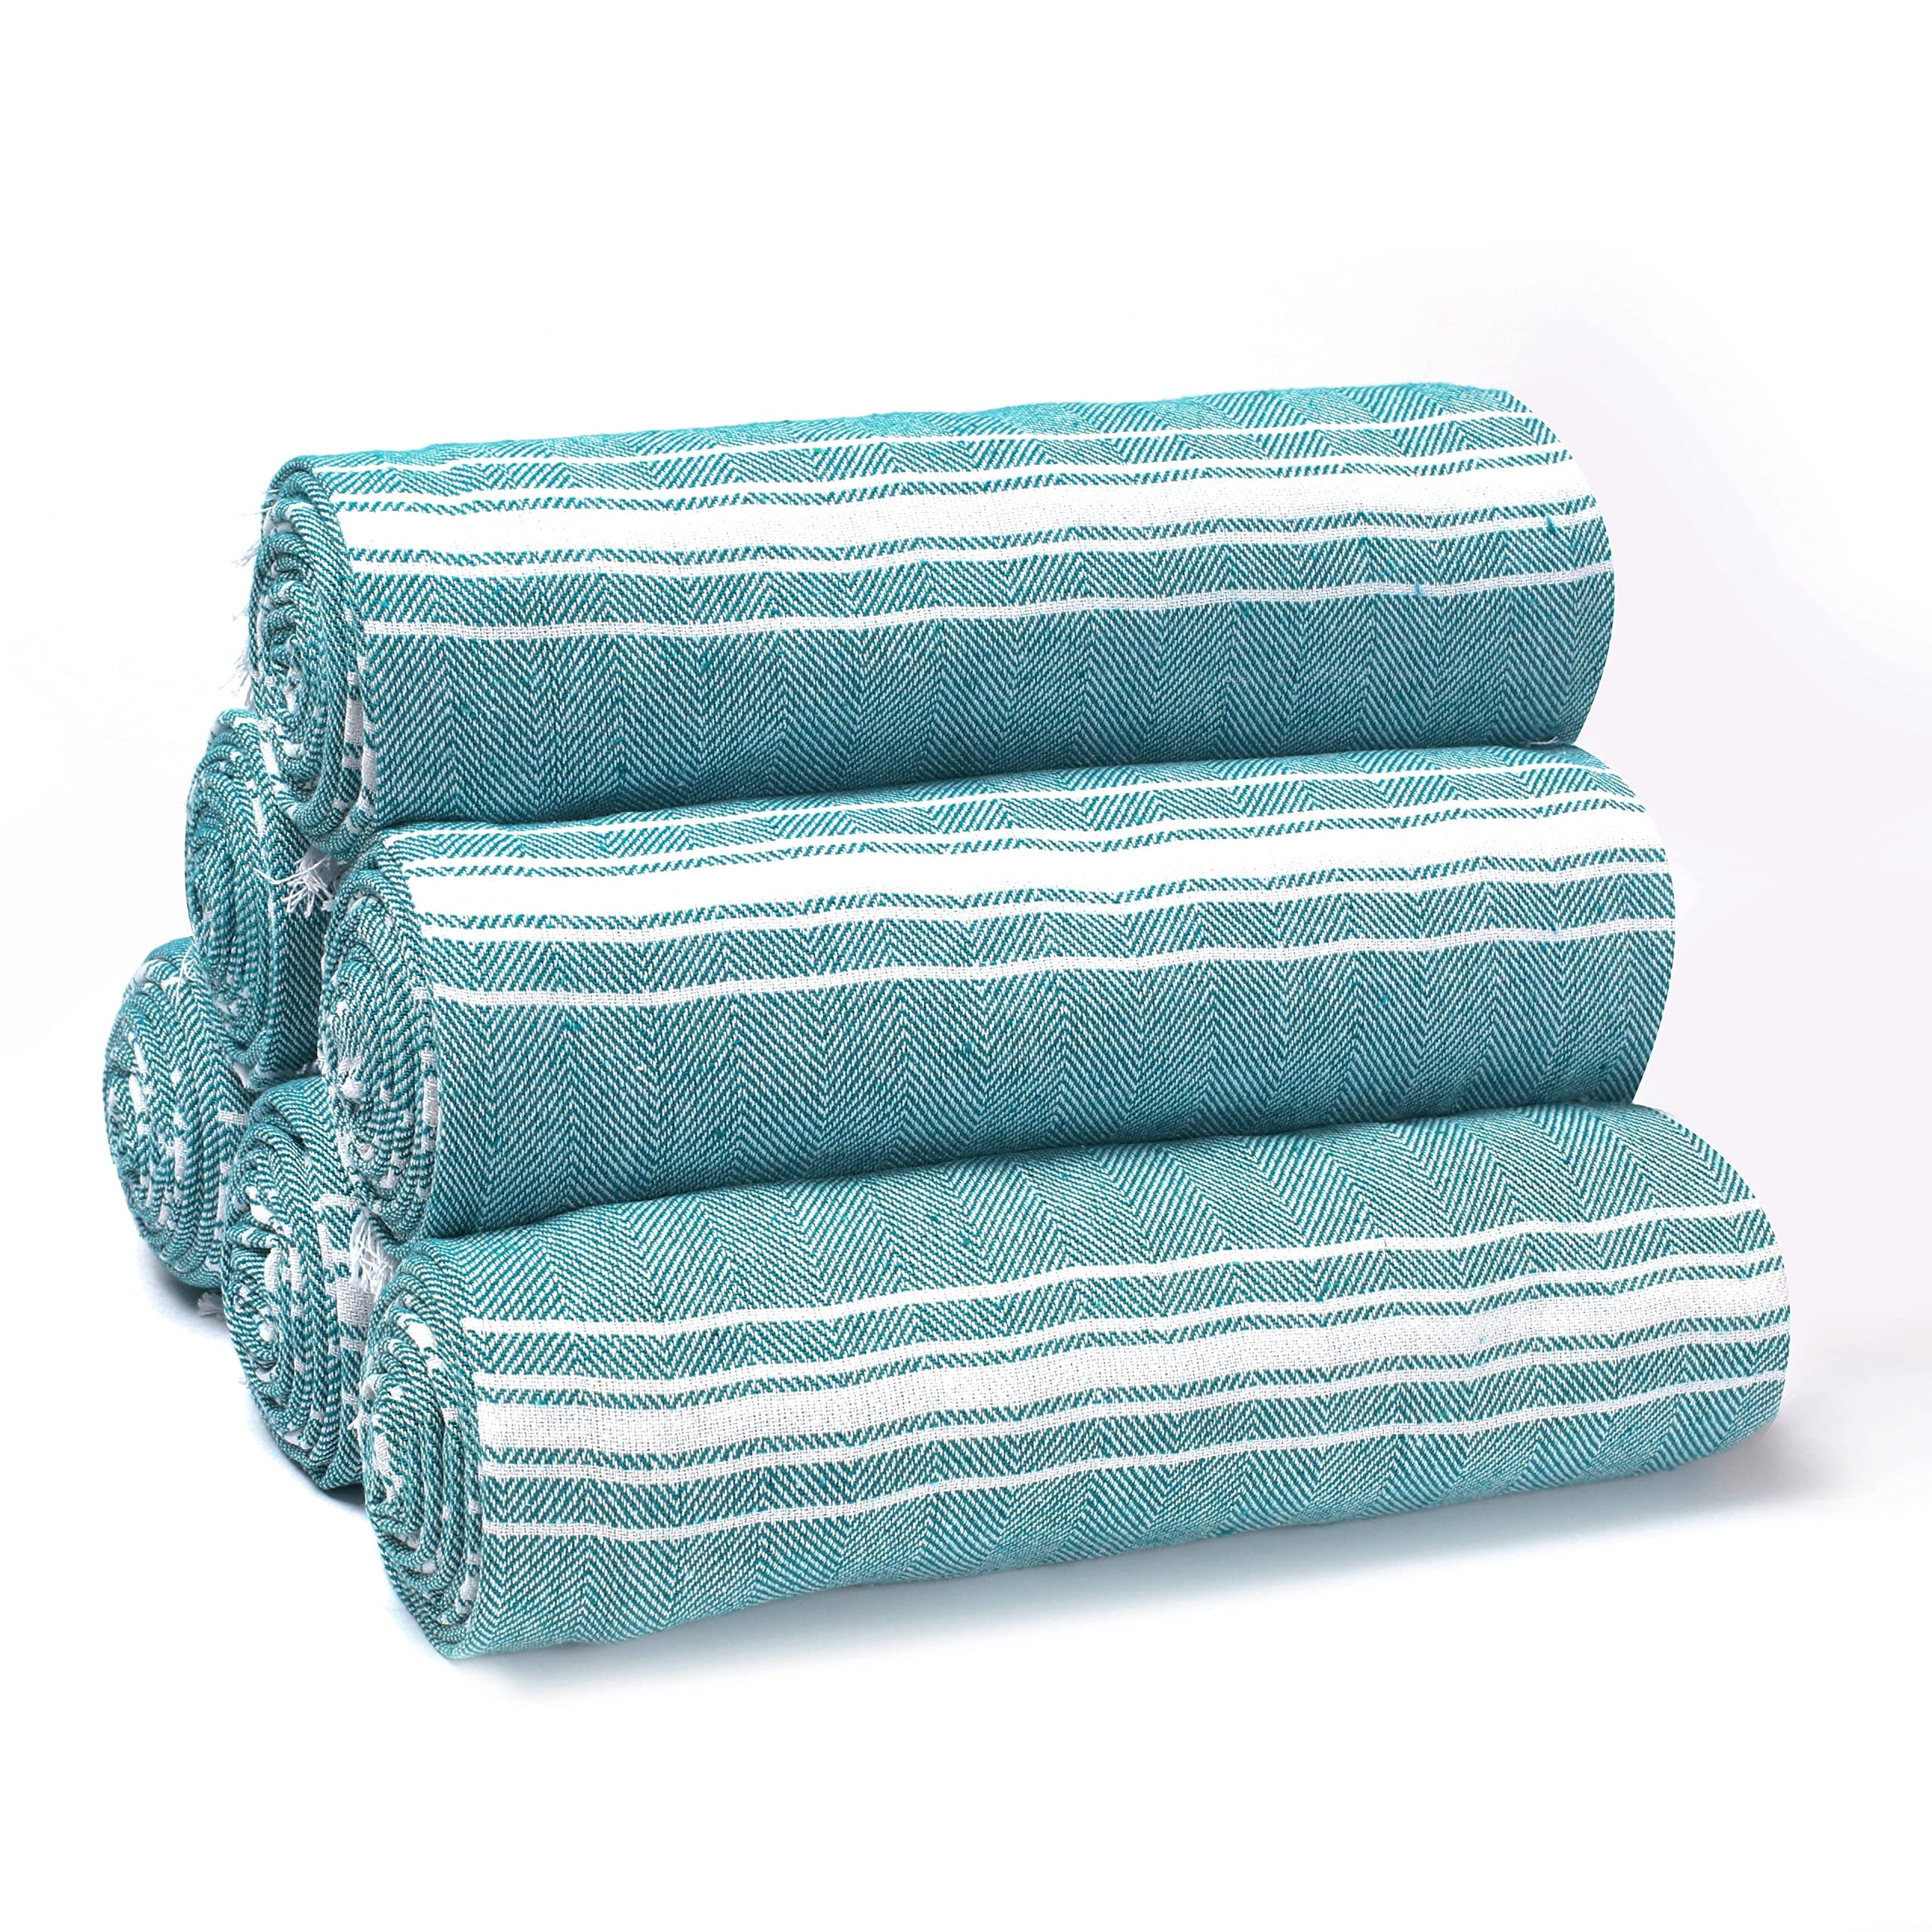 Belizzi Home 8 Piece Towel Set 100% Ring Spun Cotton, 2 Bath Towels 27x54,  2 Han